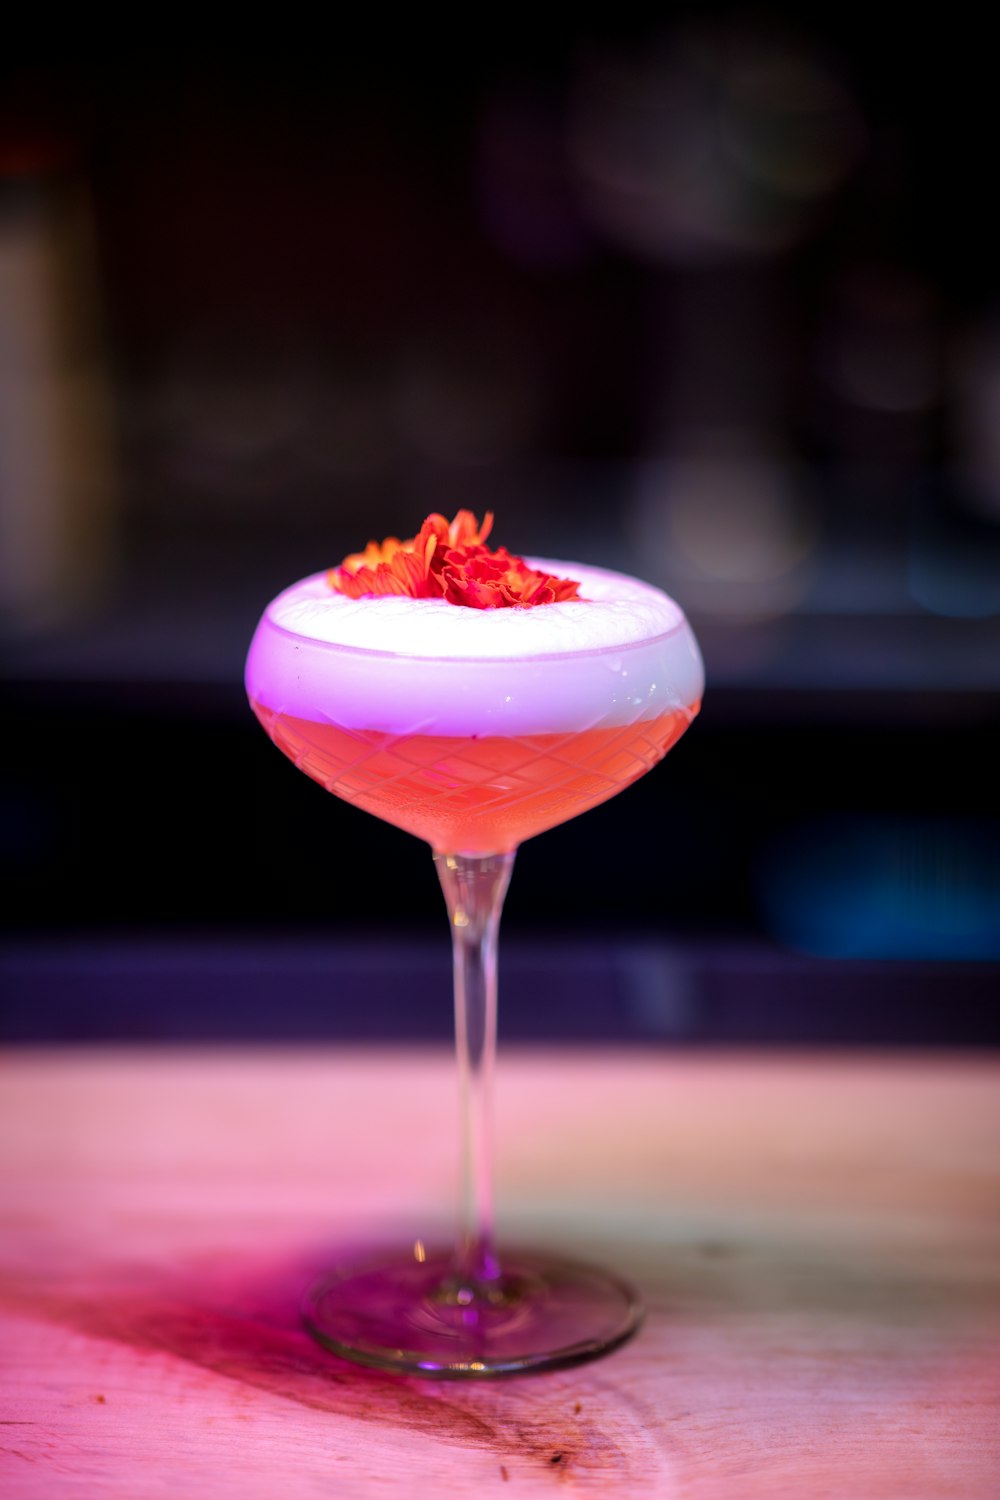 a pink cocktail with a garnish garnish on the rim